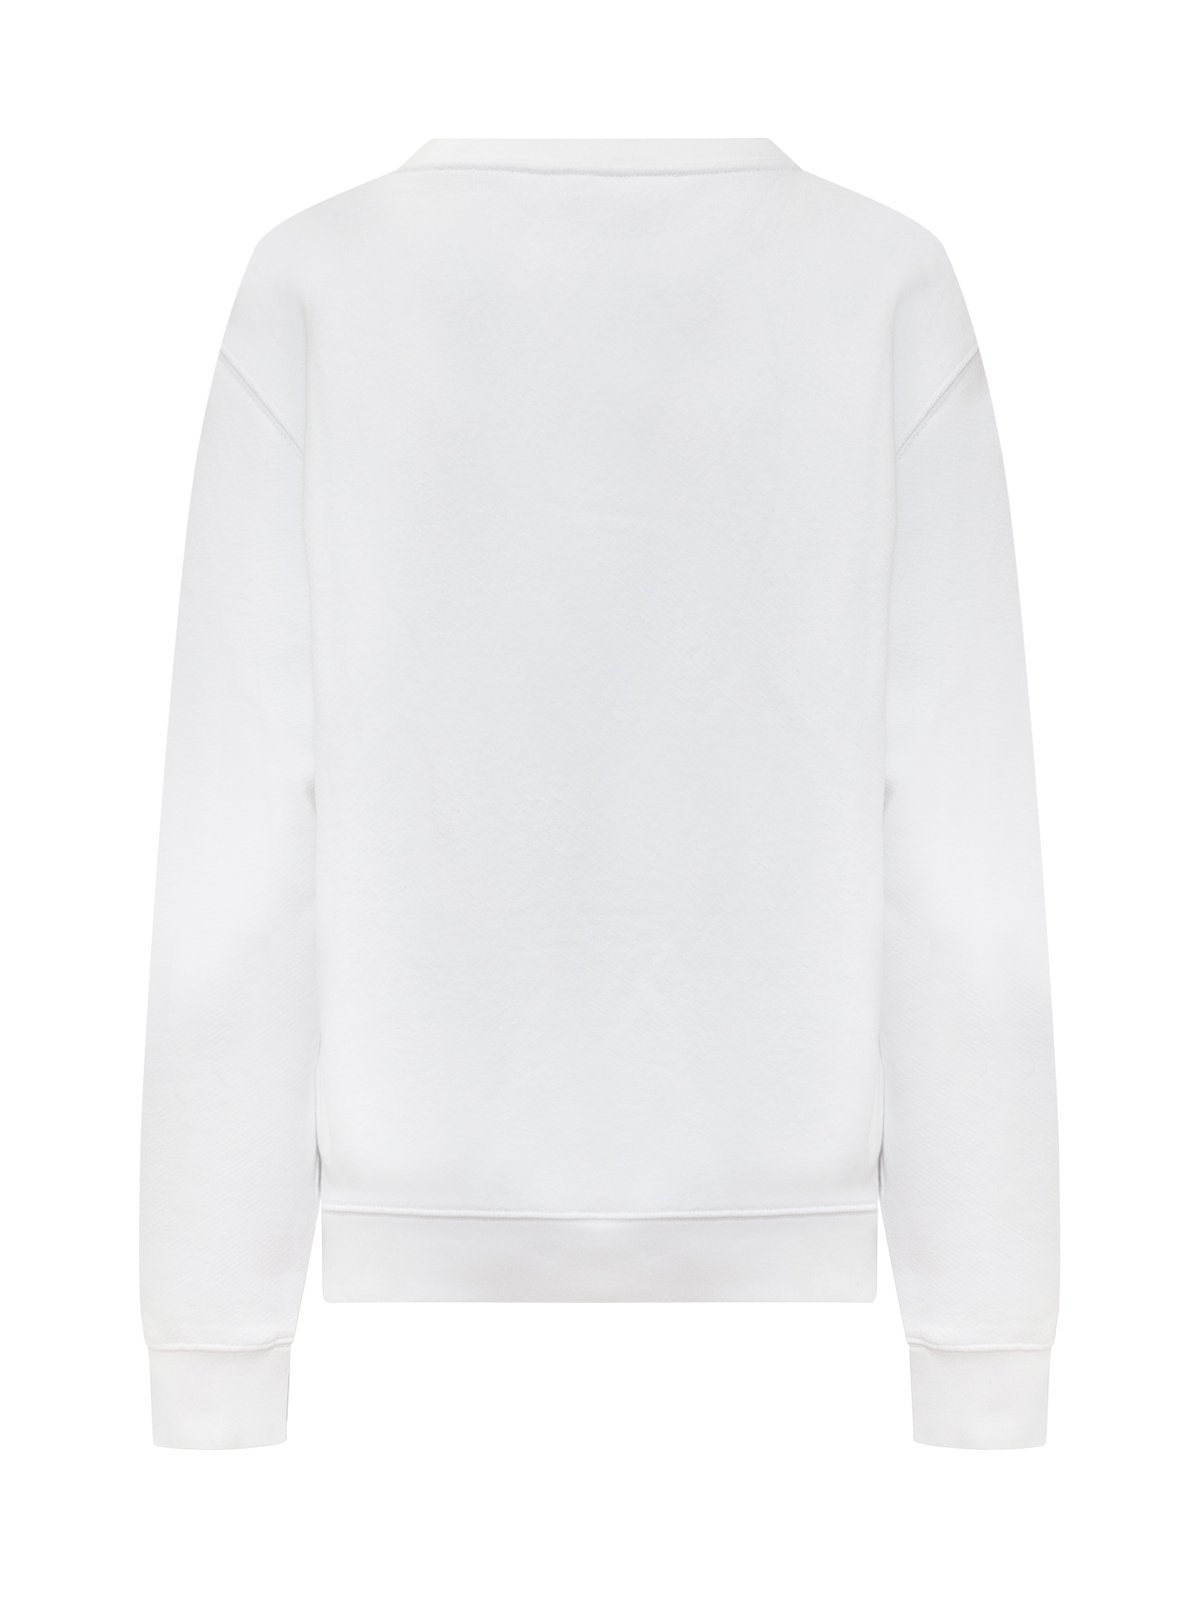 Off-White Logo Printed Long-Sleeved Sweatshirt